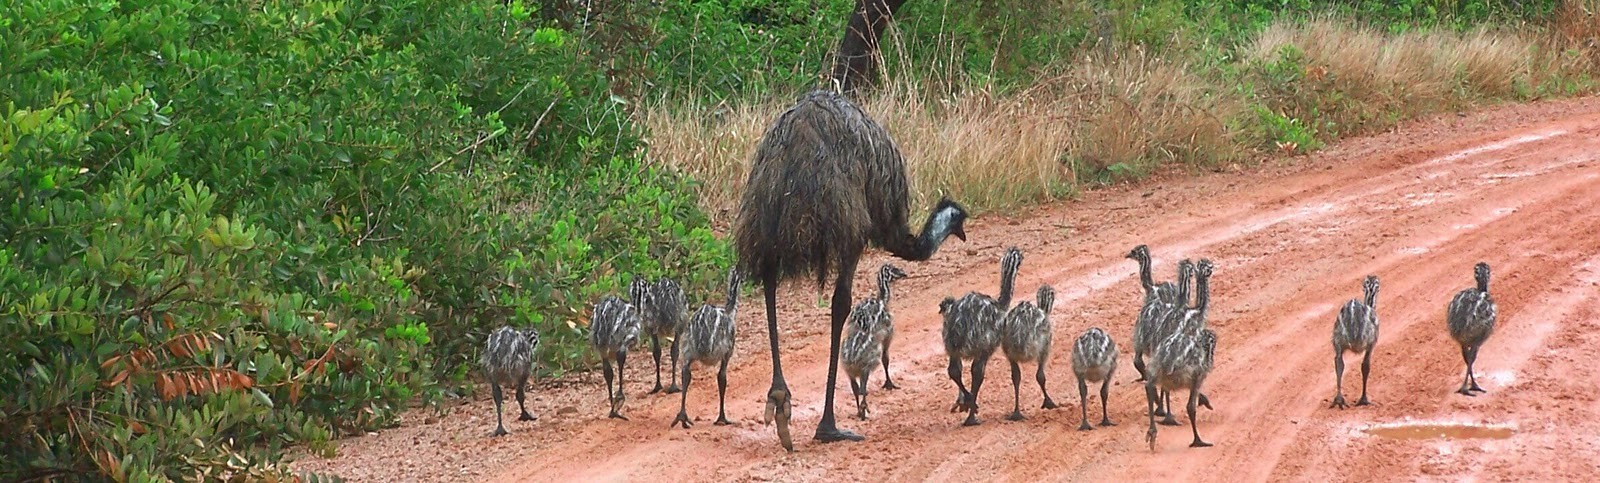 Emu család